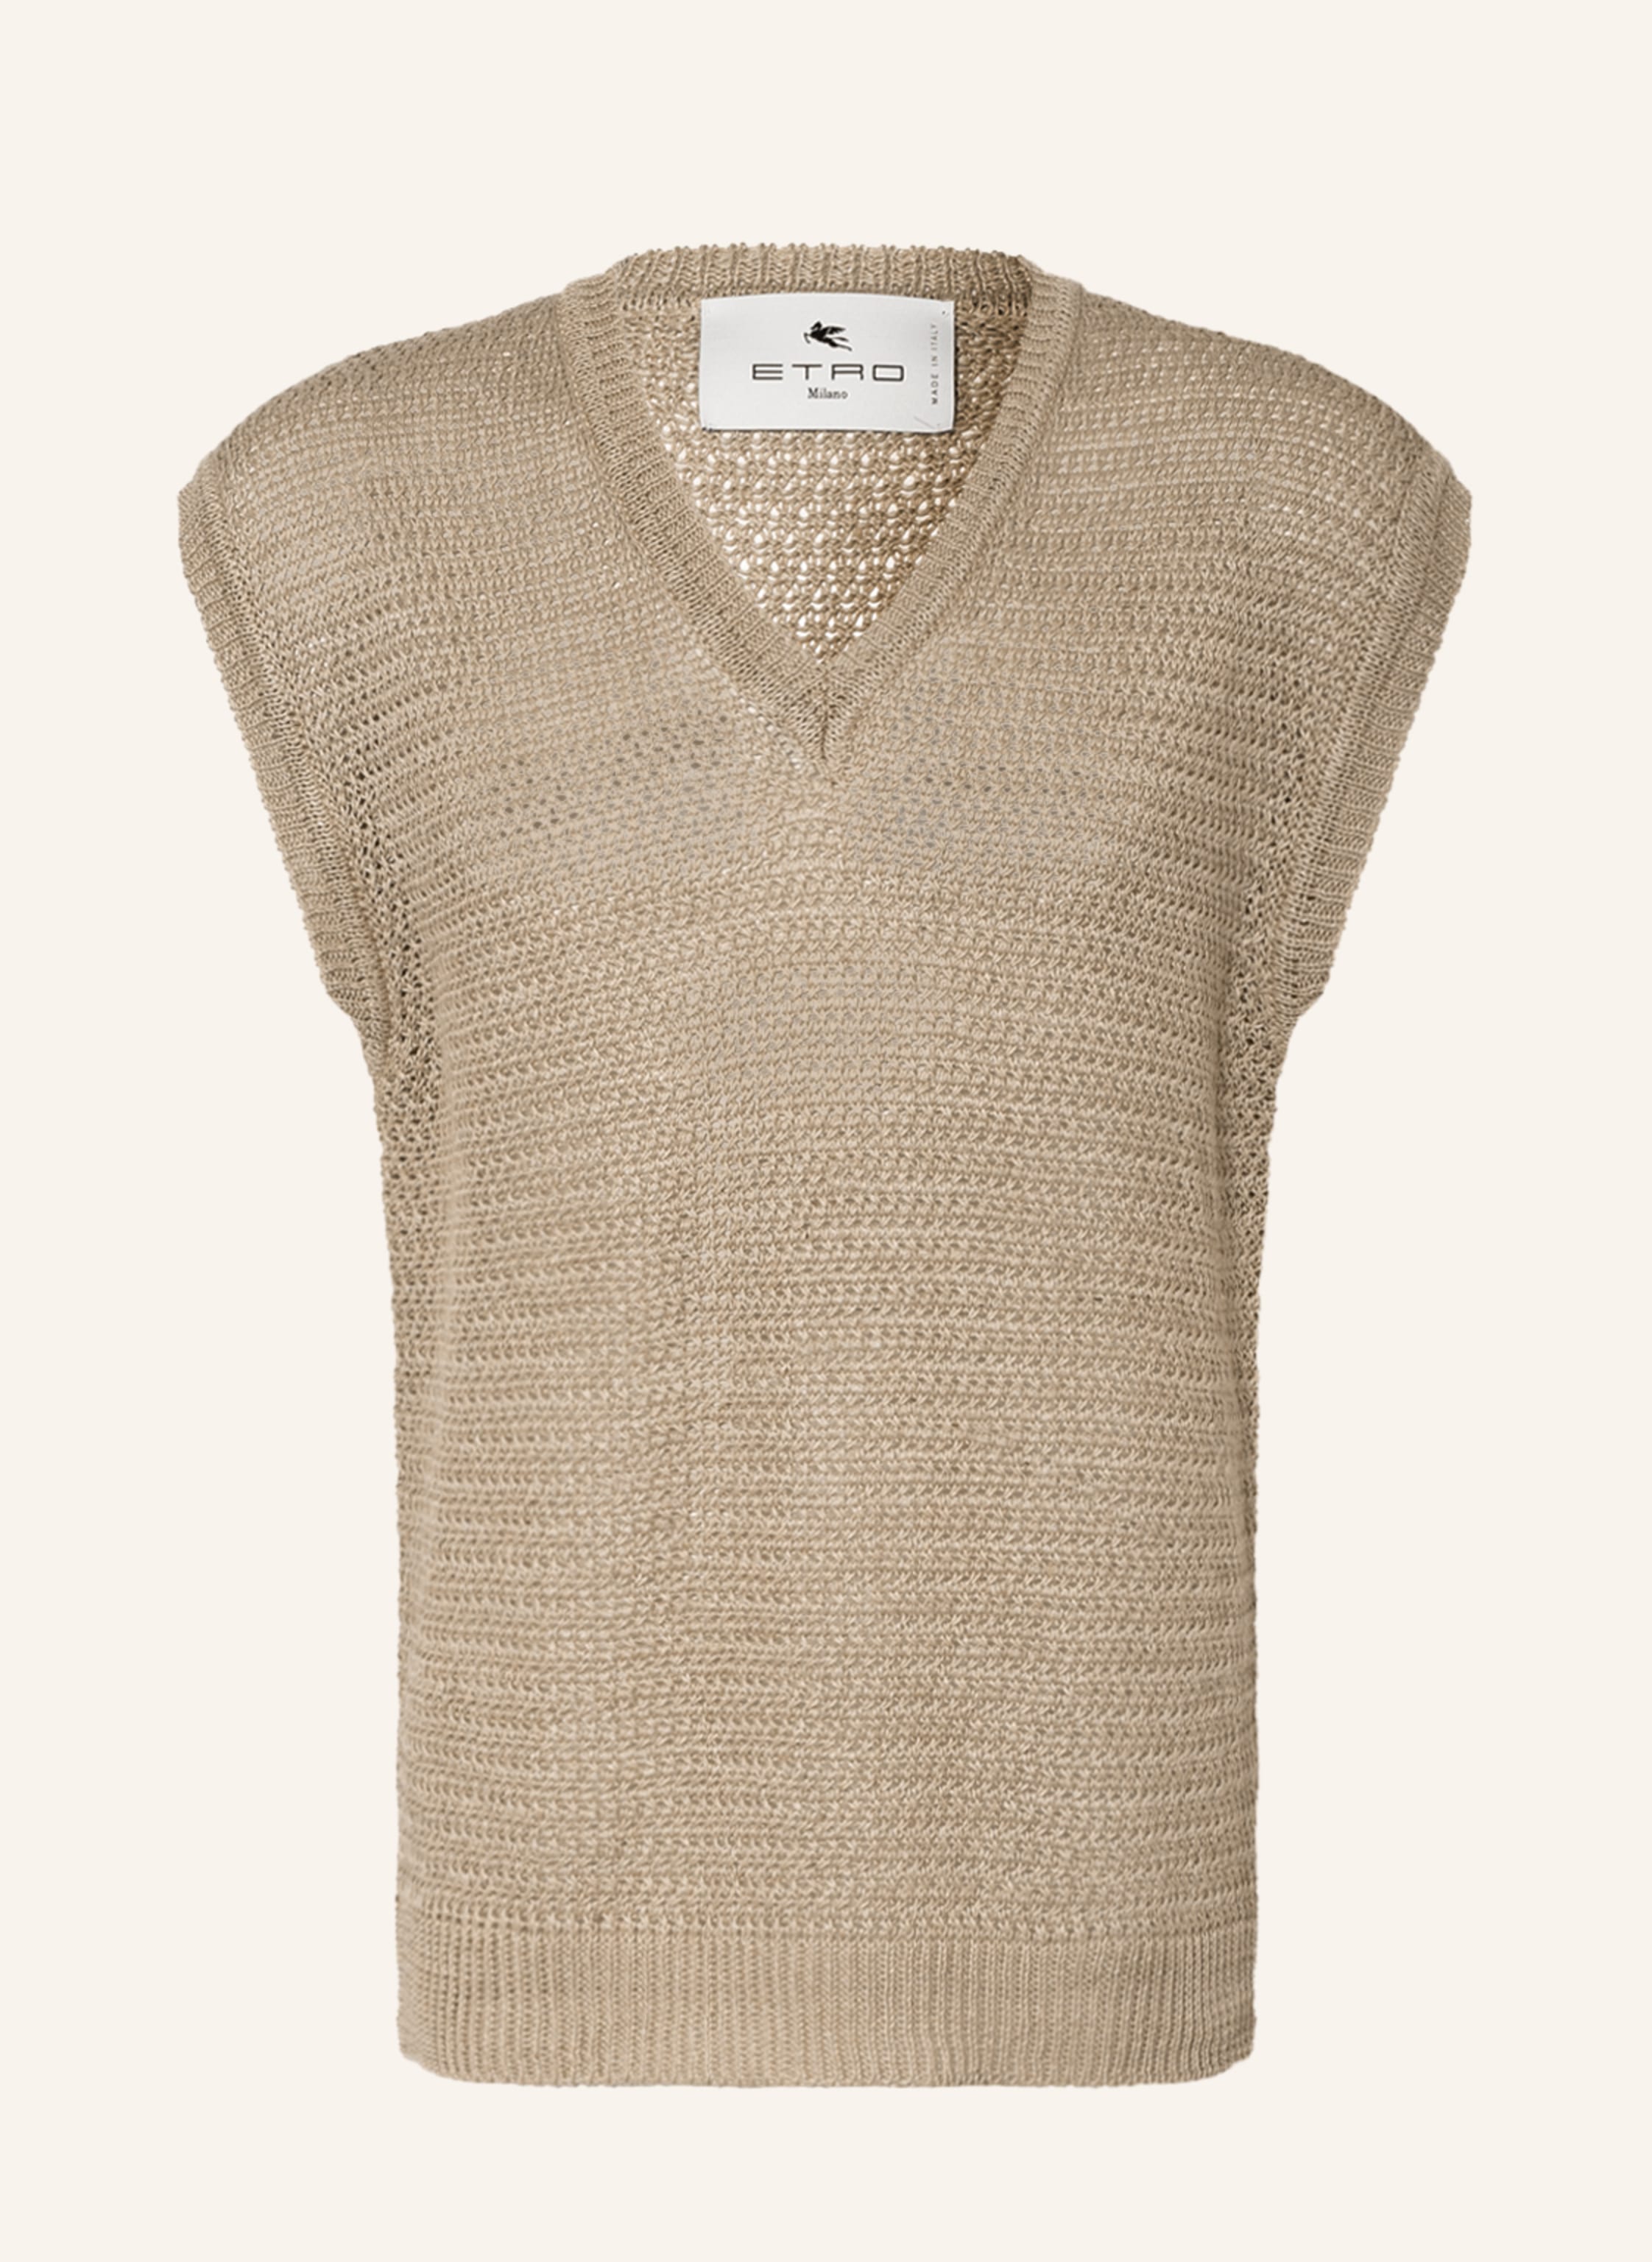 ETRO Linen sleeveless sweater in beige | Breuninger